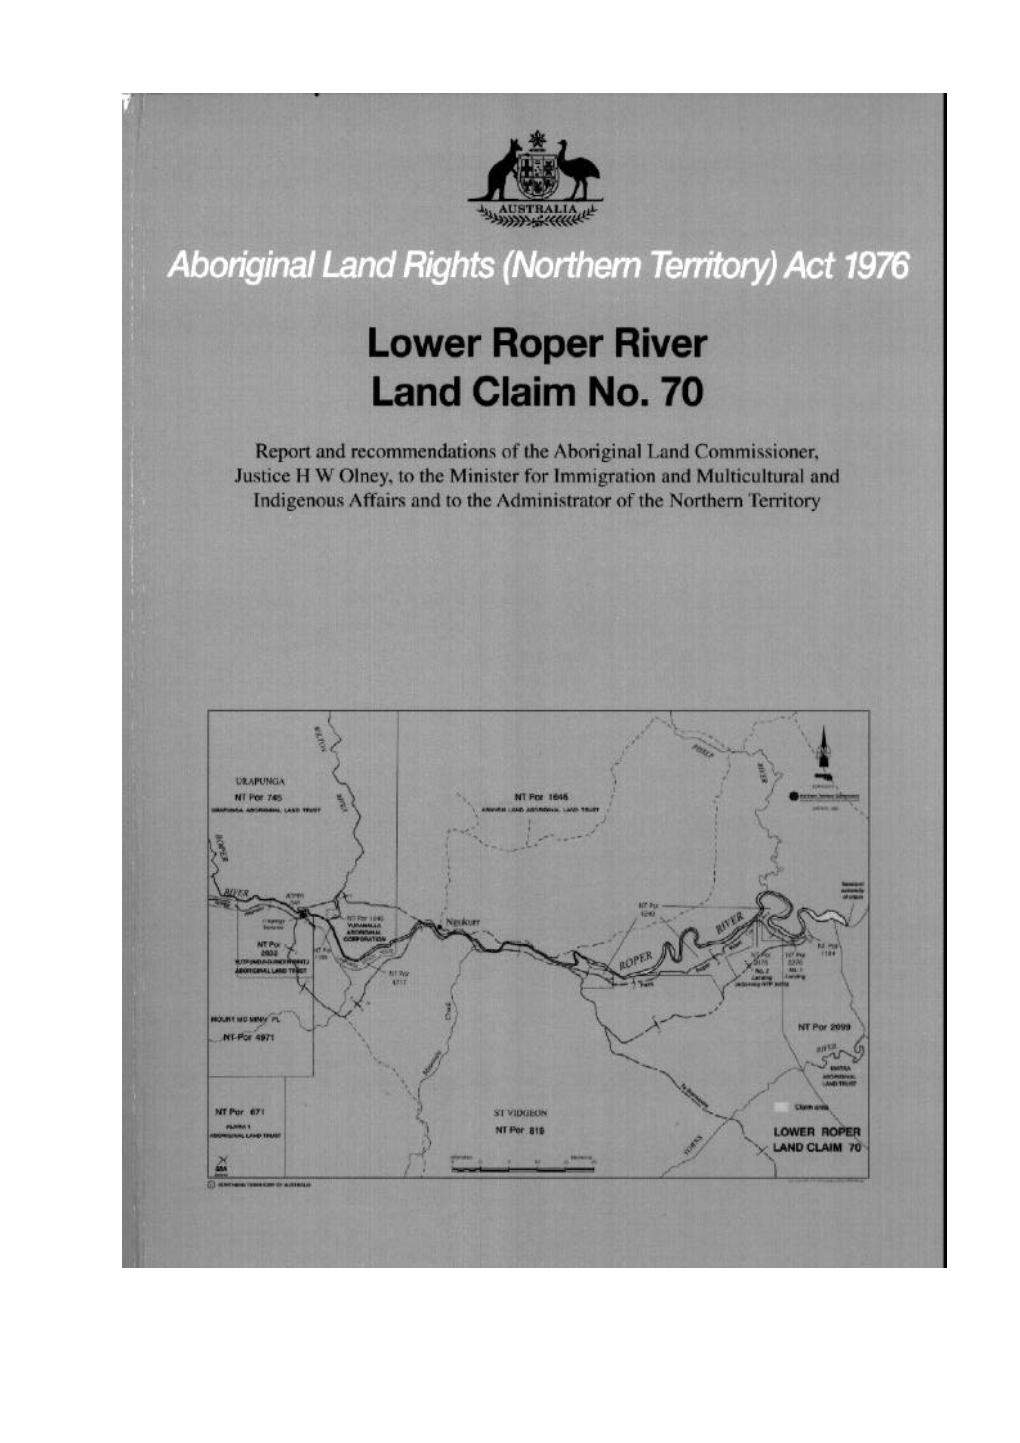 Lower Roper River Land Claim